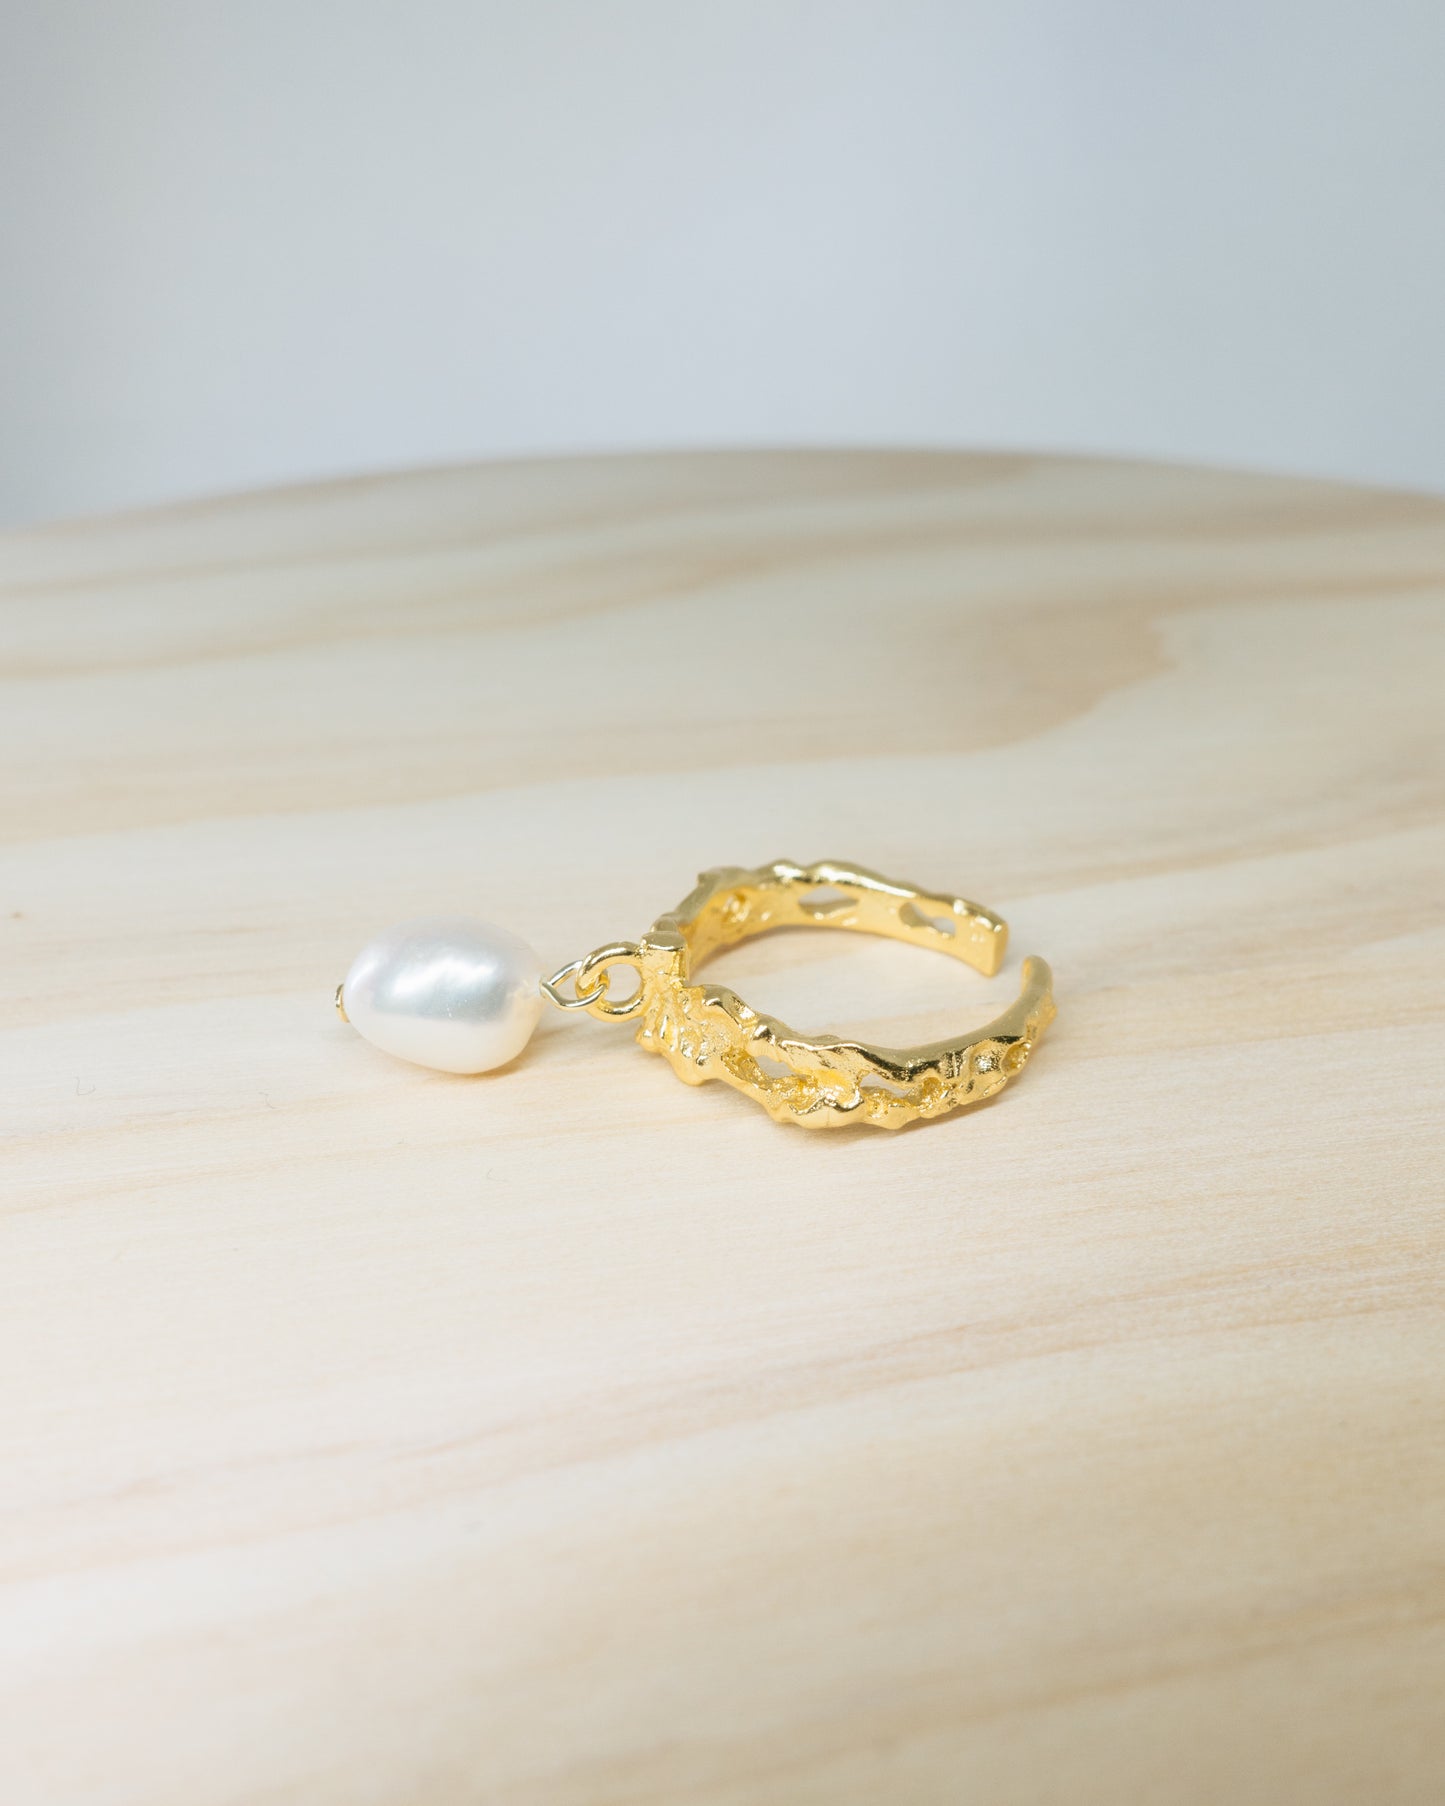 Henri baroque pearl ring